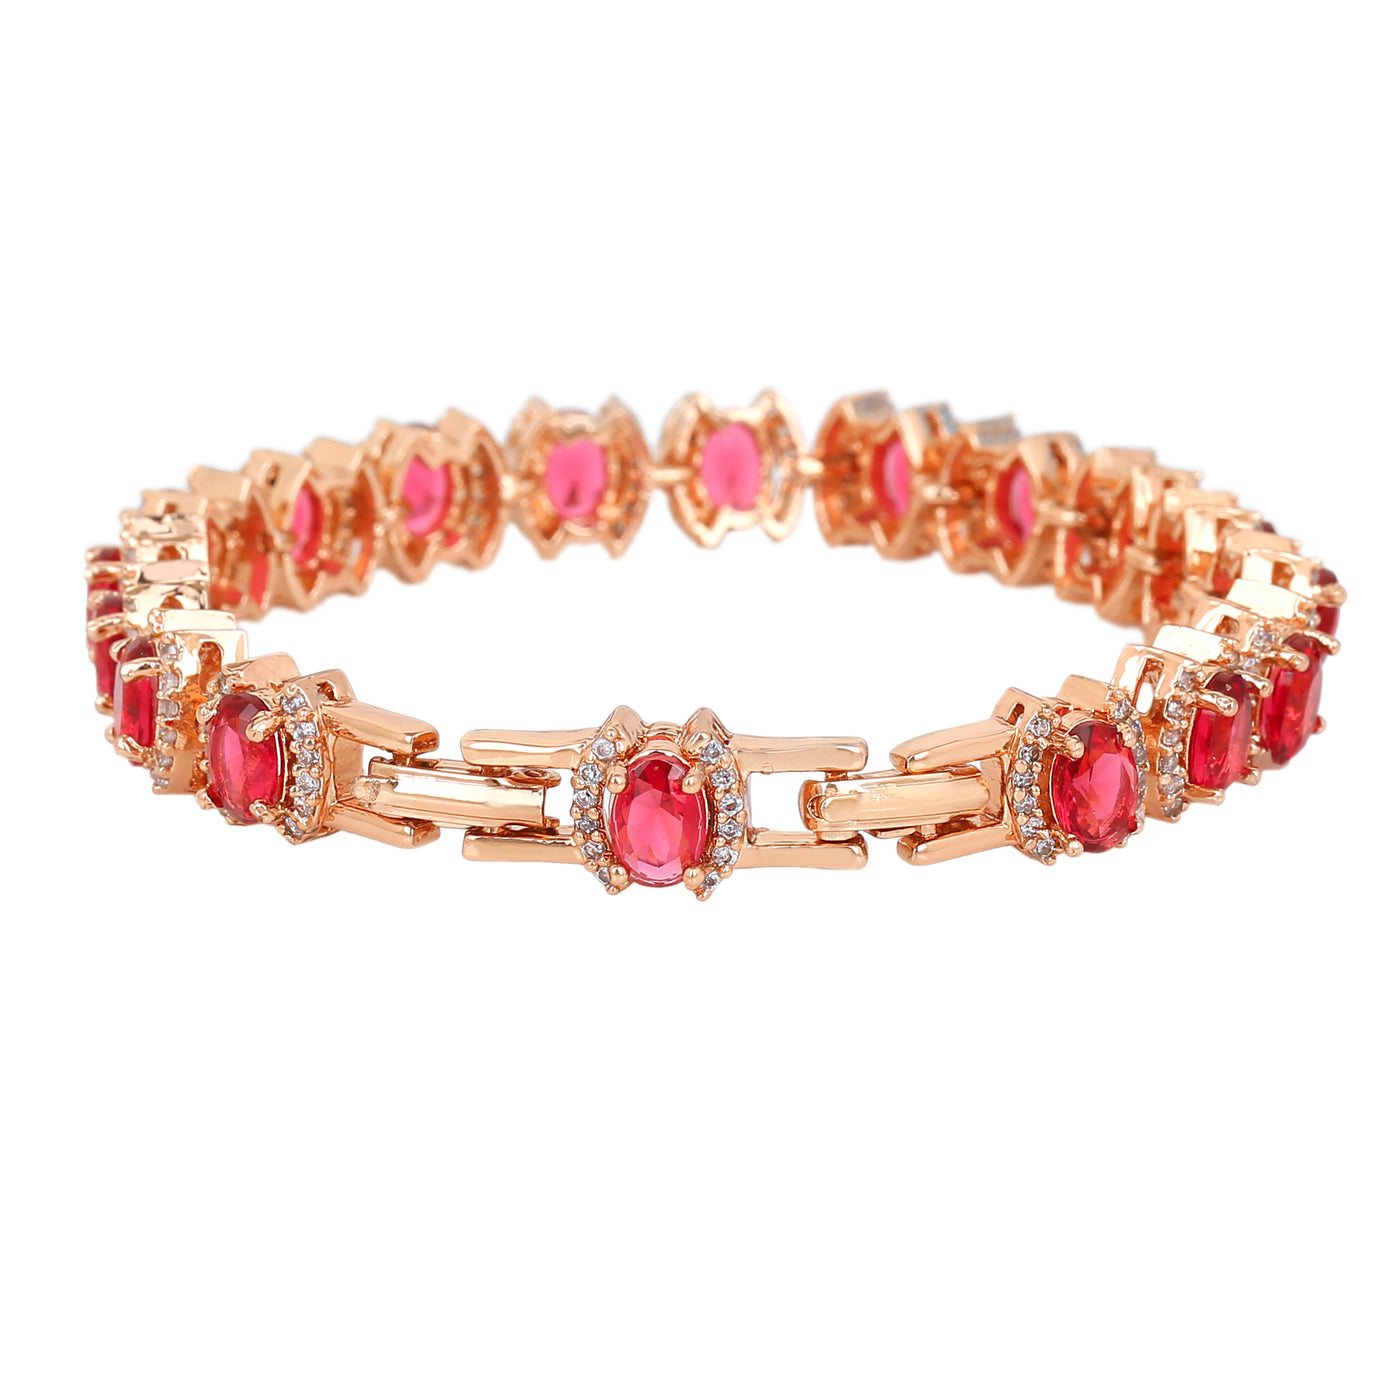 Estele Rose Gold Plated CZ Dazzling Bracelet with Tourmaline Pink Stones for Women